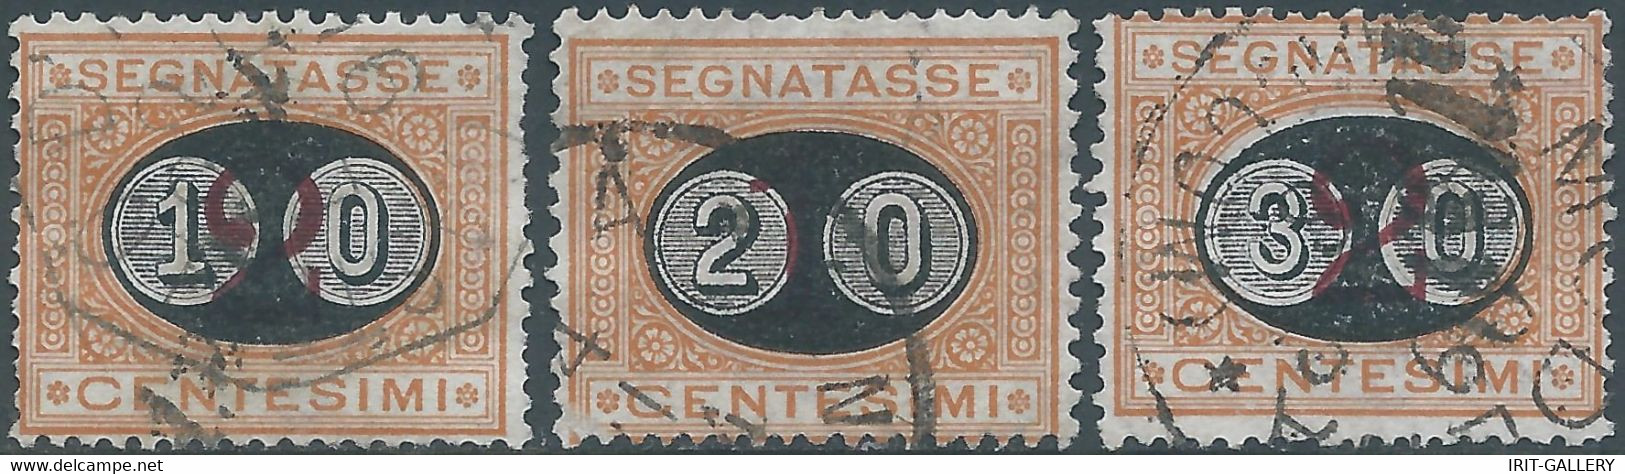 ITALY,ITALIE-ITALIEN,Kingdom 1890 Segnatasse,Services Postage Due,2c On 10c-1c On 20c-2c On 30c,Obliterated,Value:€85,00 - Taxe